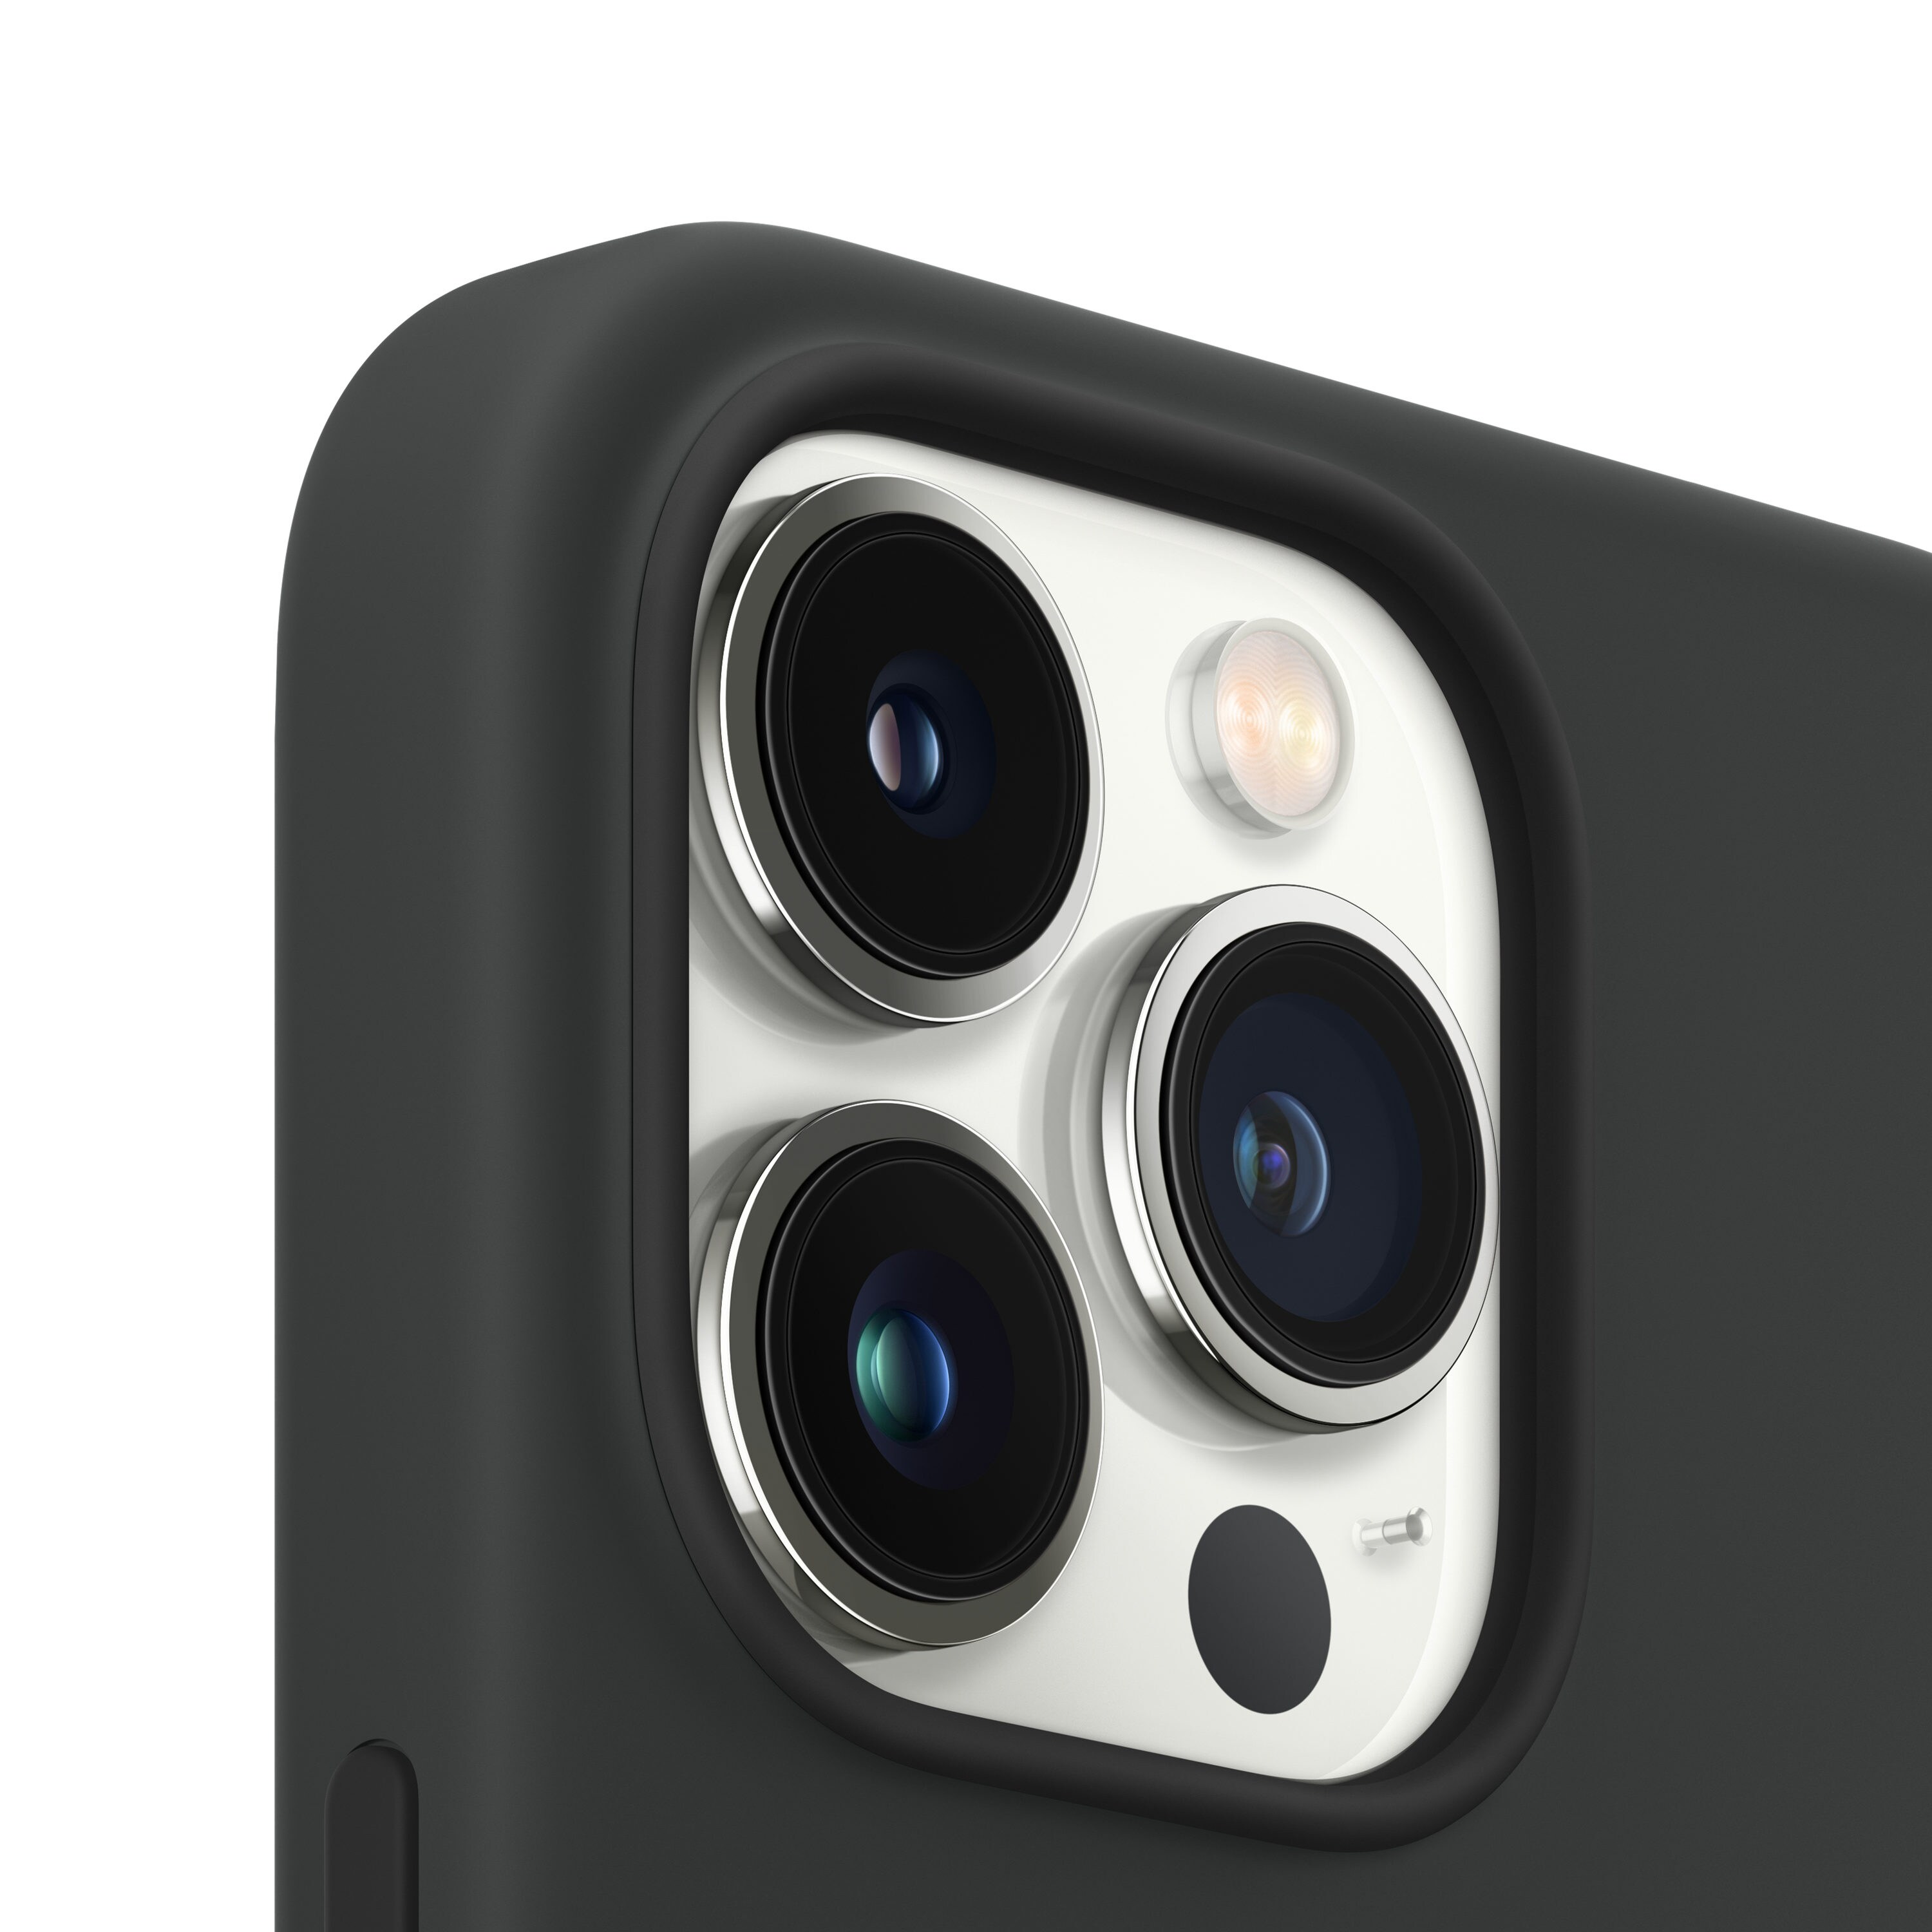 iPhone 13 Pro Max silicone case